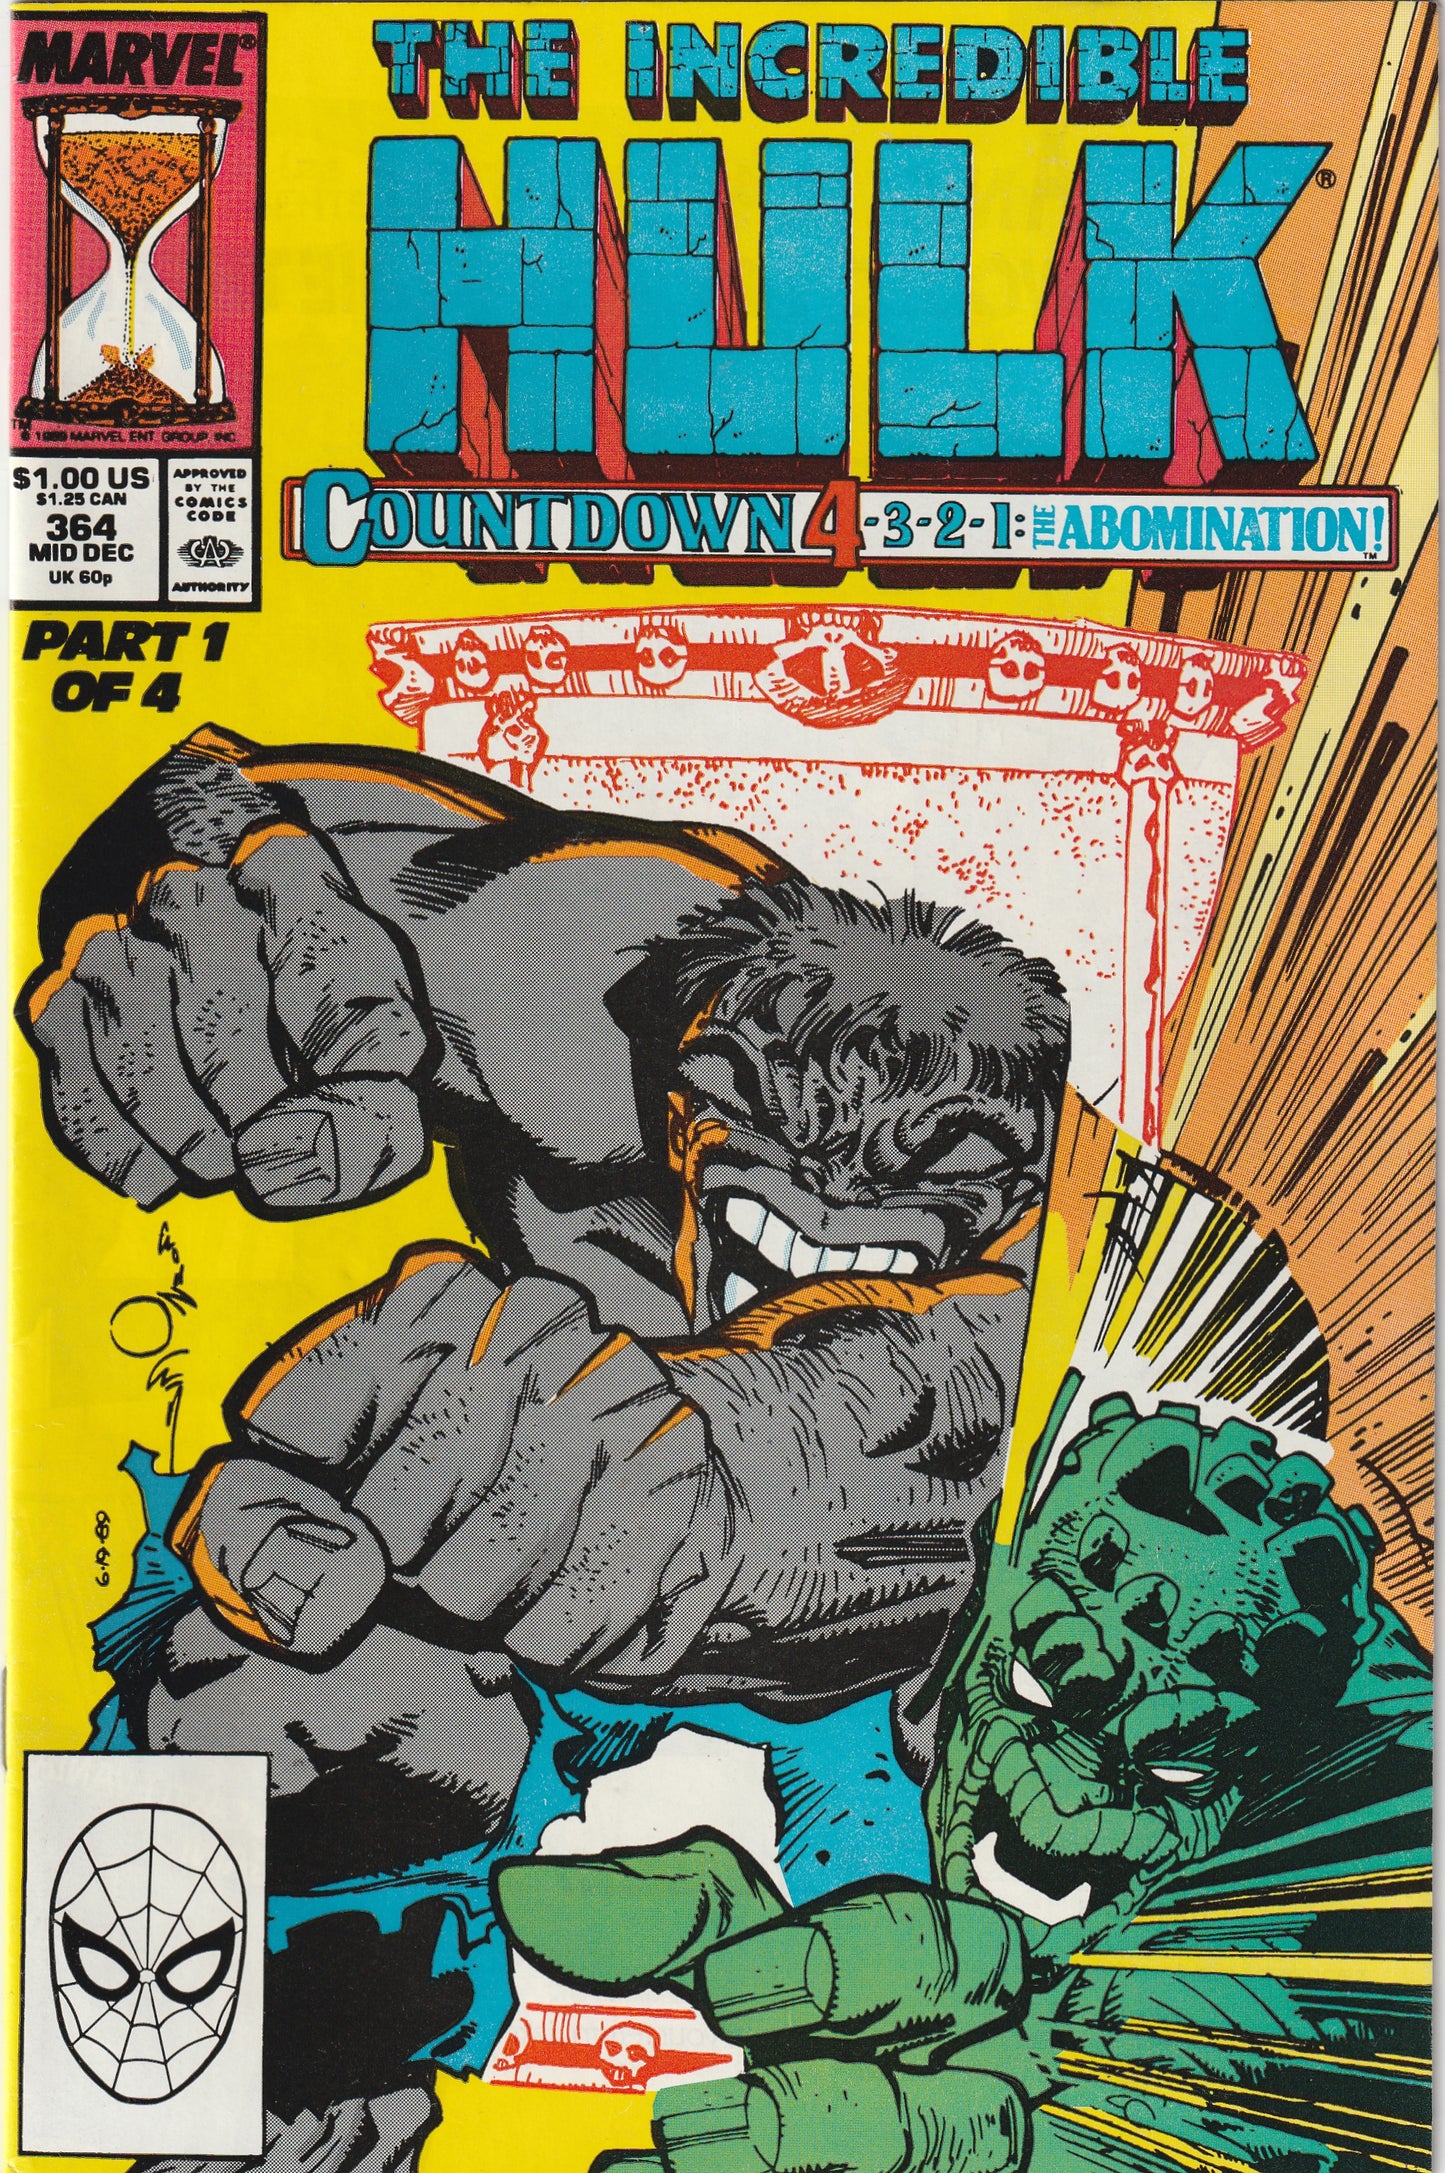 Incredible Hulk #364 (1989) - 1st Appearance of Madman